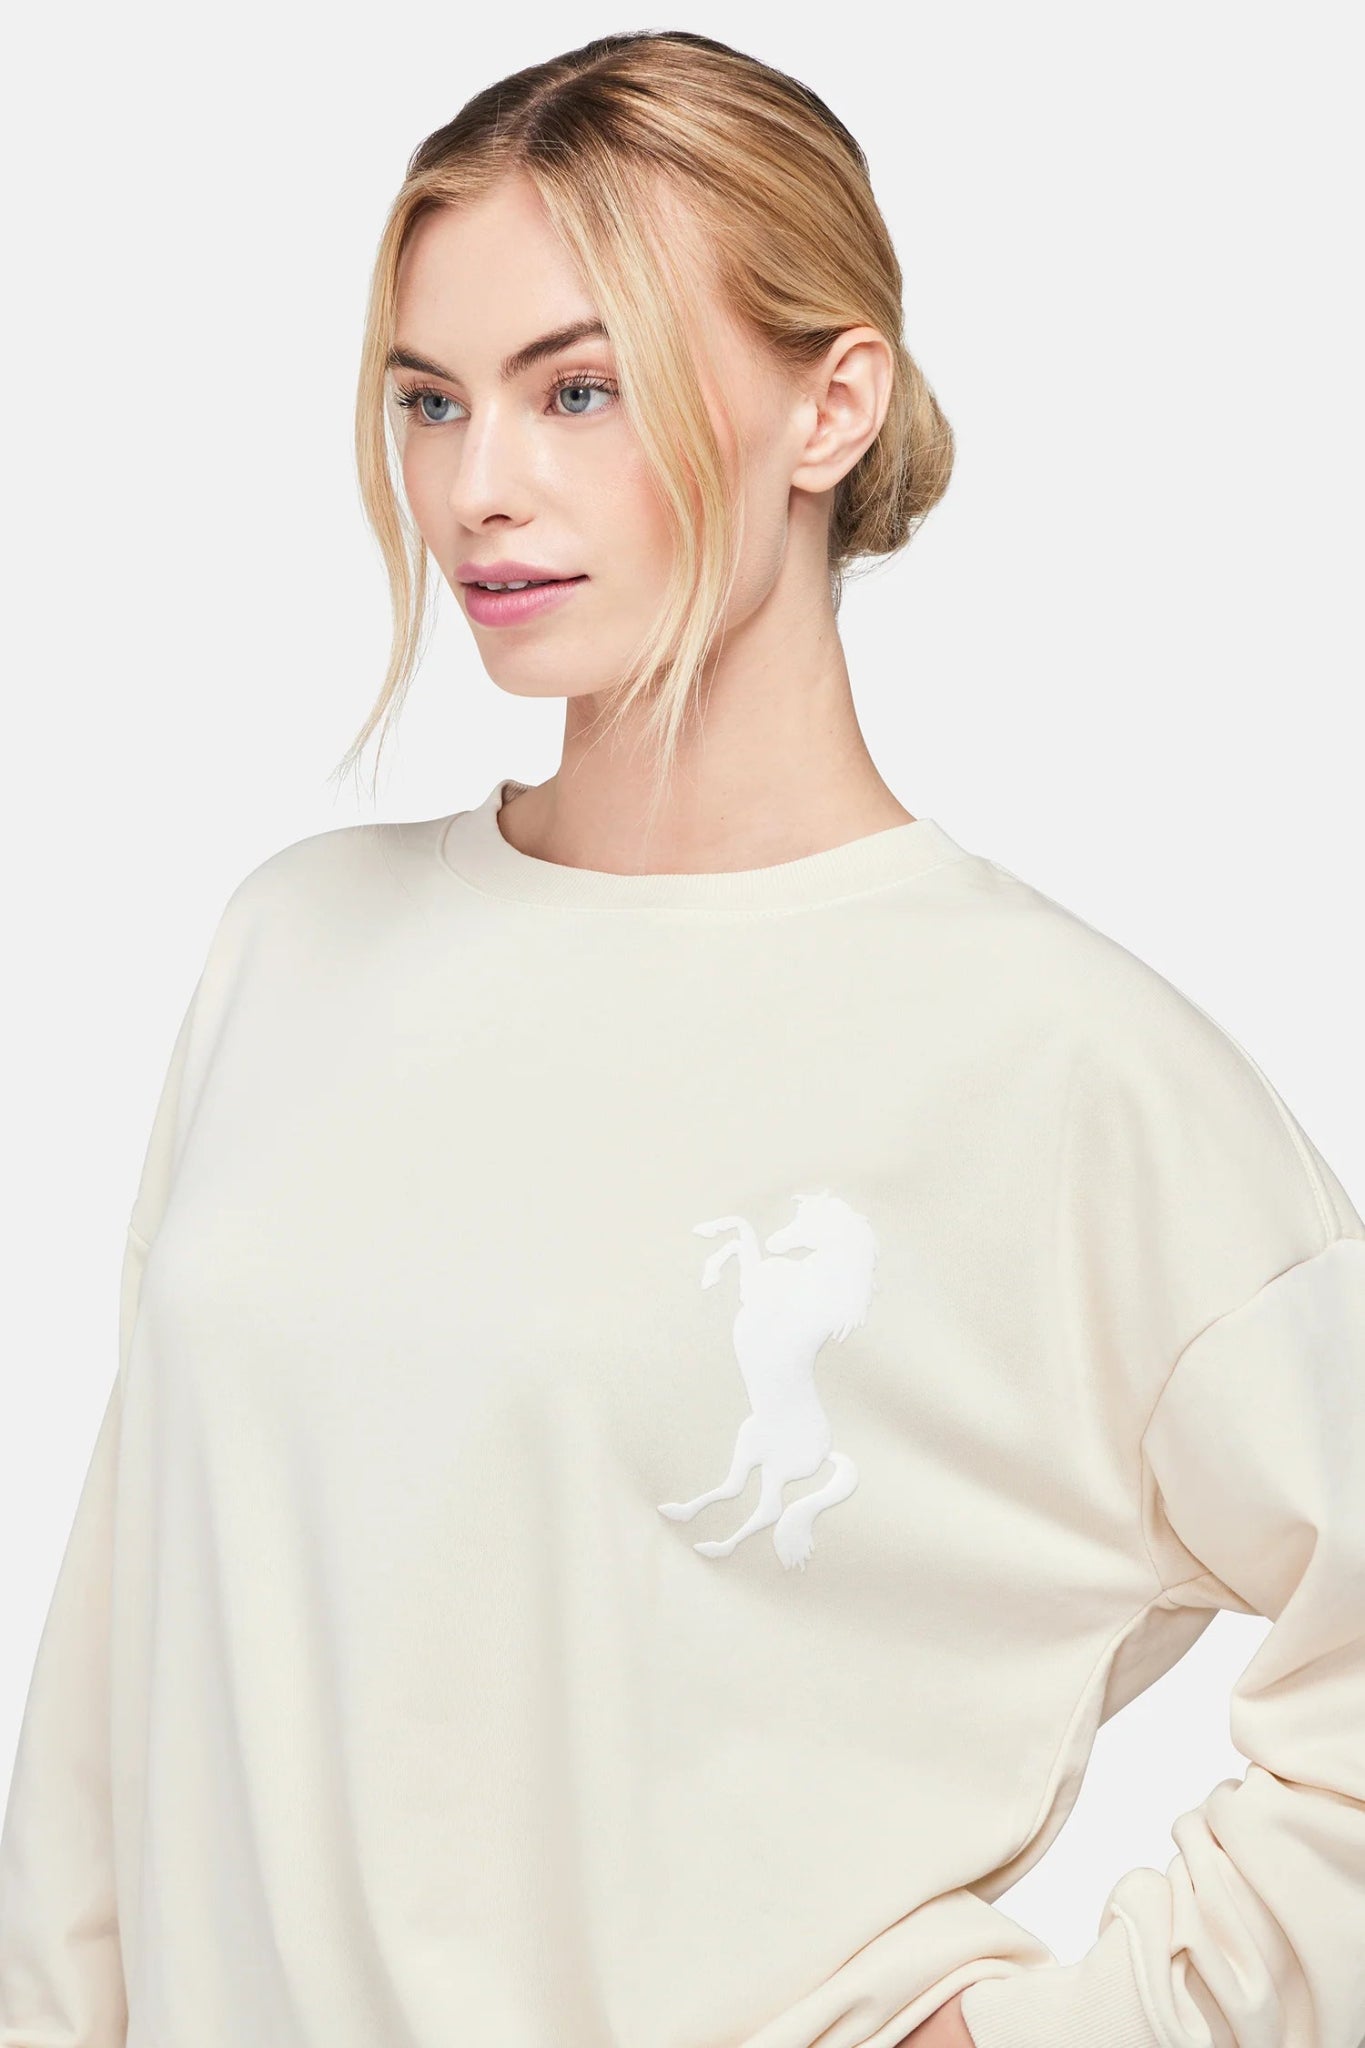 Shop Wildfox Sparkle Pony Roadtrip Sweatshirt - Premium Jumper from Wildfox Online now at Spoiled Brat 